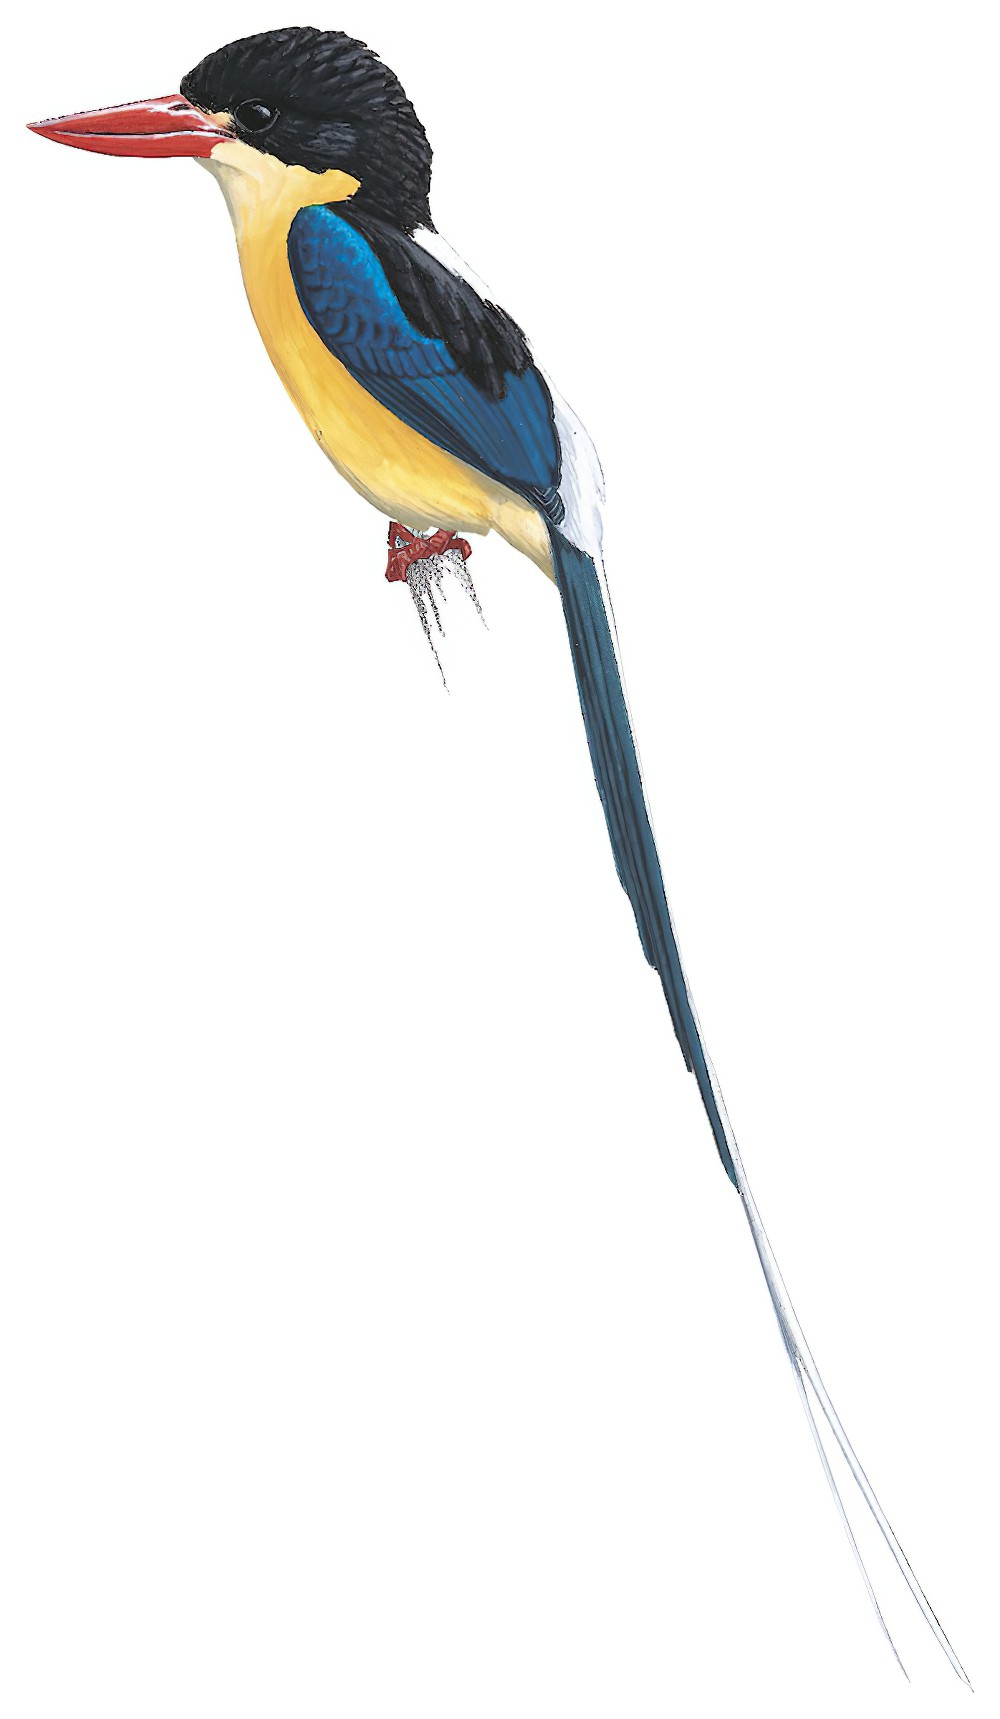 Black-capped Paradise-Kingfisher / Tanysiptera nigriceps